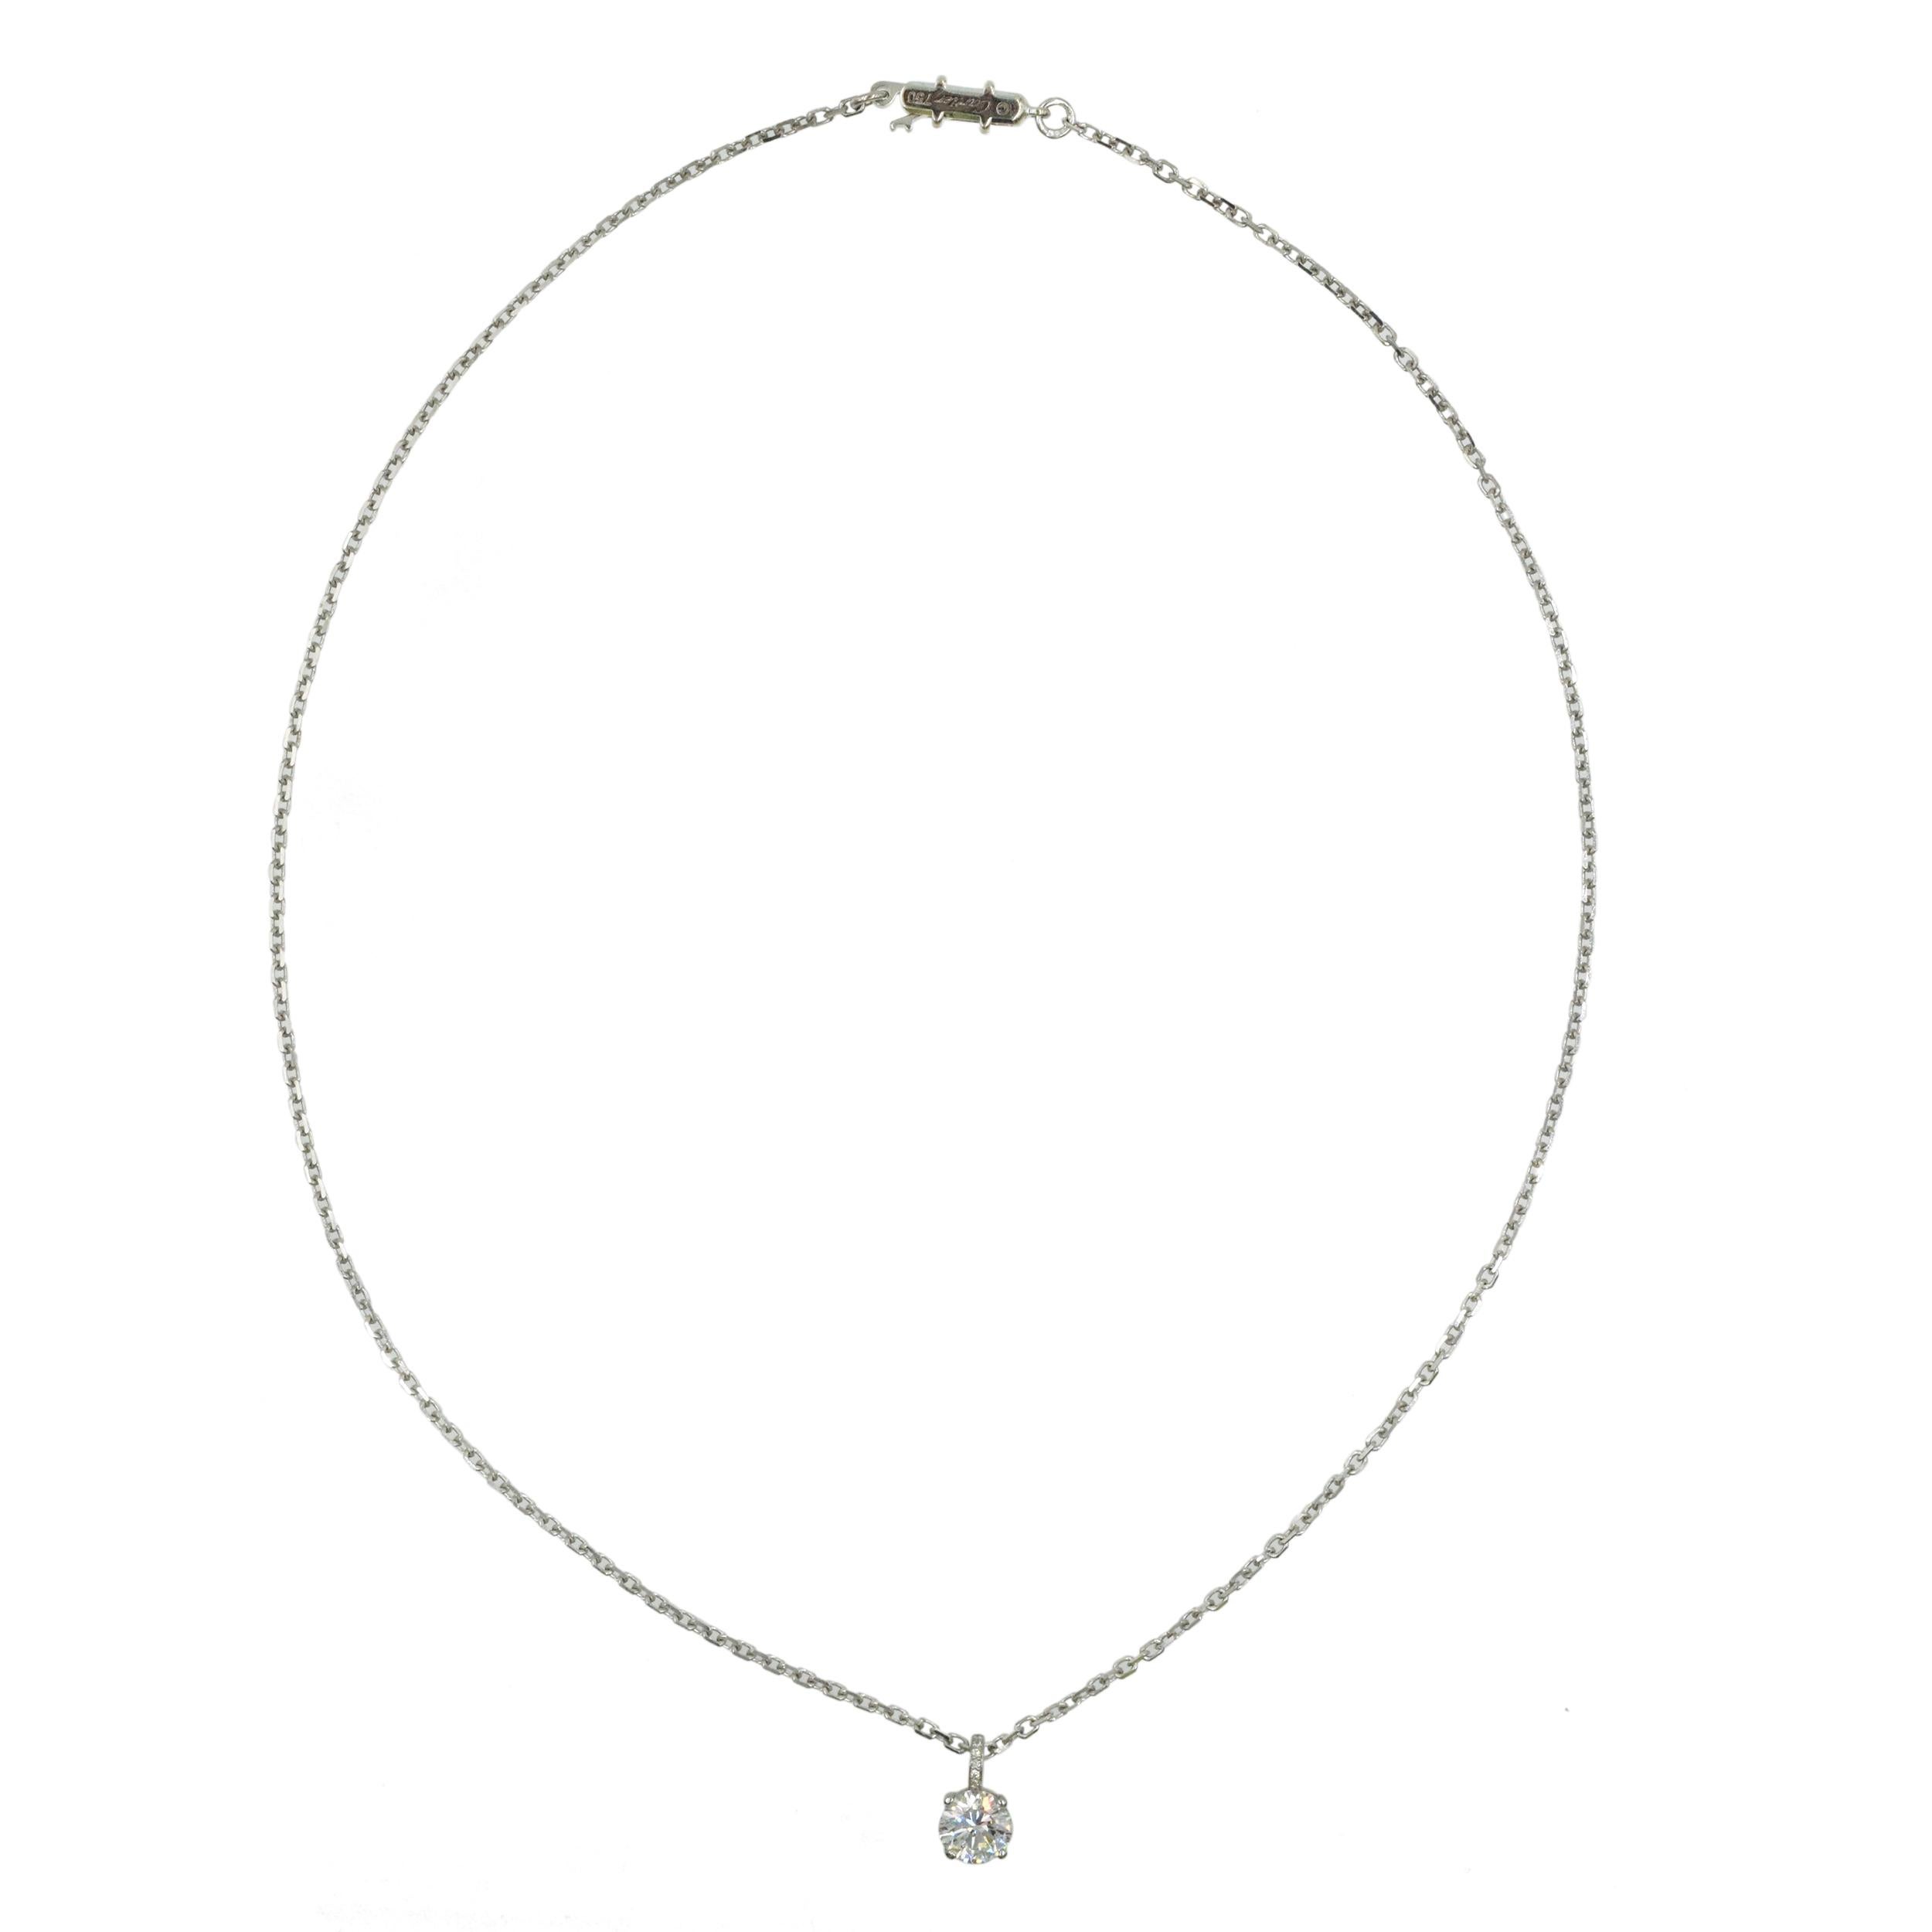 Cartier 18k White Gold & Platinum Diamond Solitaire Pendant Necklace. This pendant necklace
has a center of 1.01 carat round brilliant center diamond, Color: D, Clarity: IF, GIA#2193906884.
Signed Cartier, Serial No. xxxxxxxxPendant) and xxxxxxx